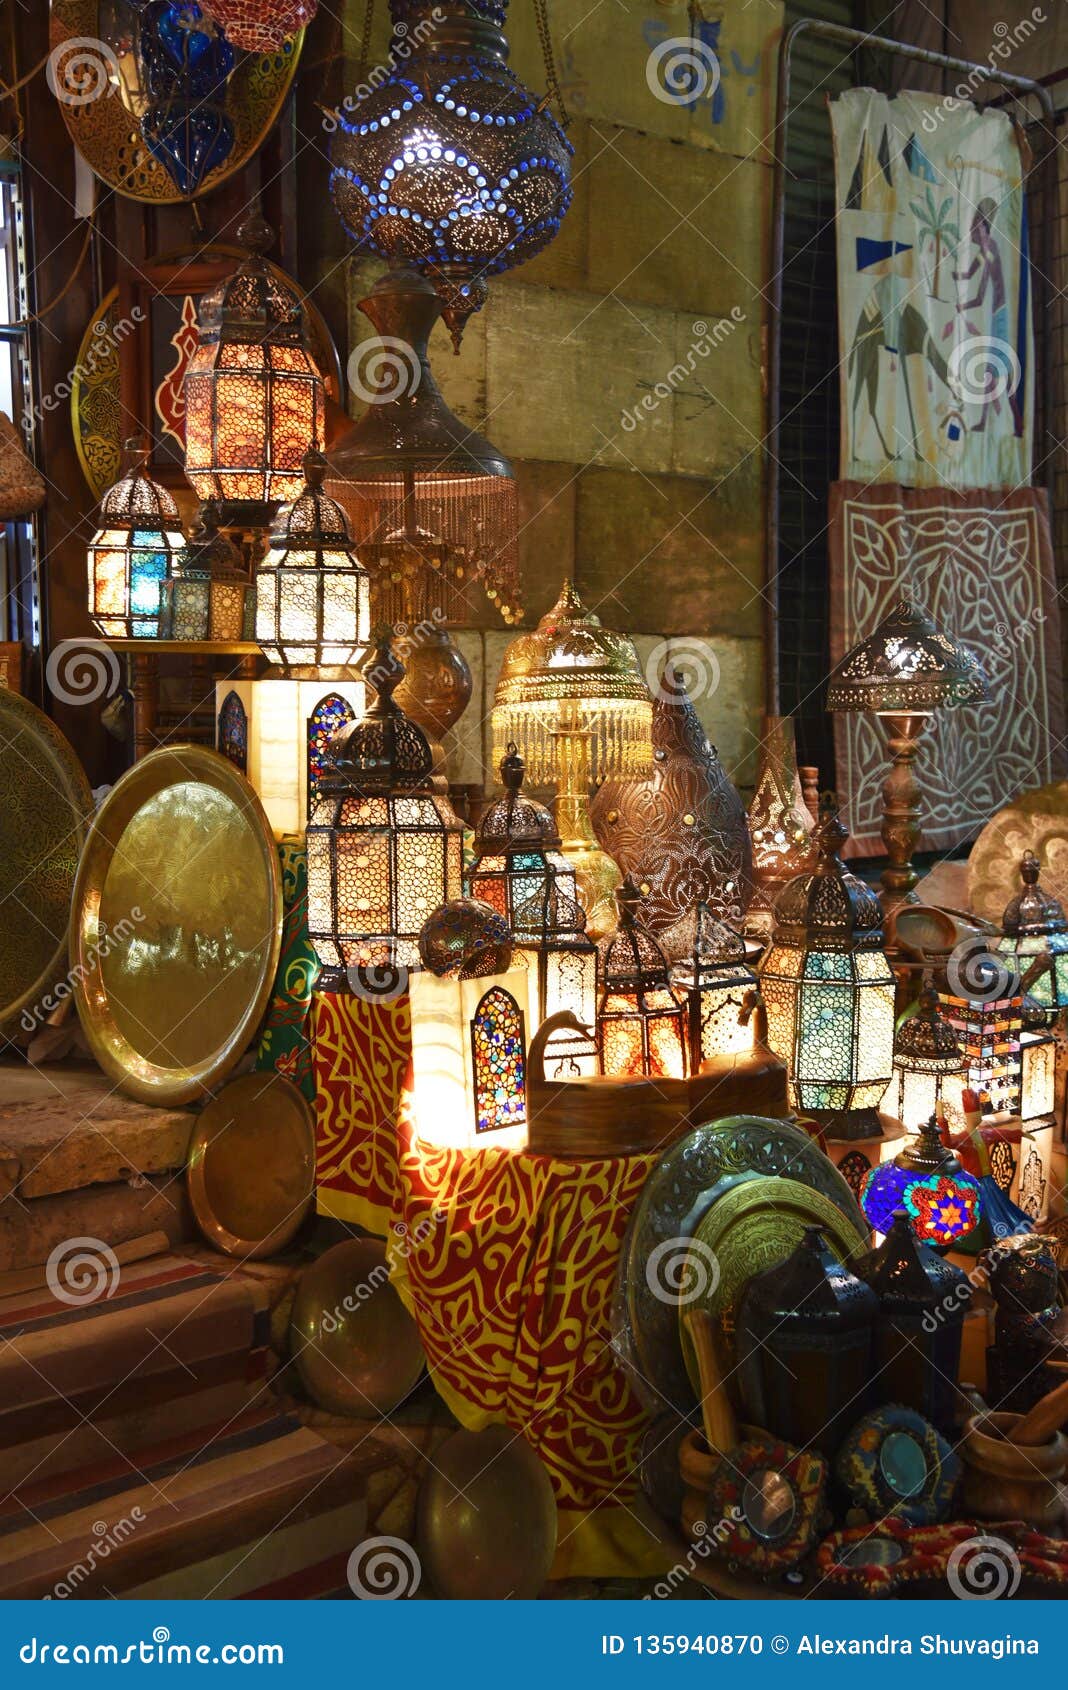 khan el-khalili eastern bazaar